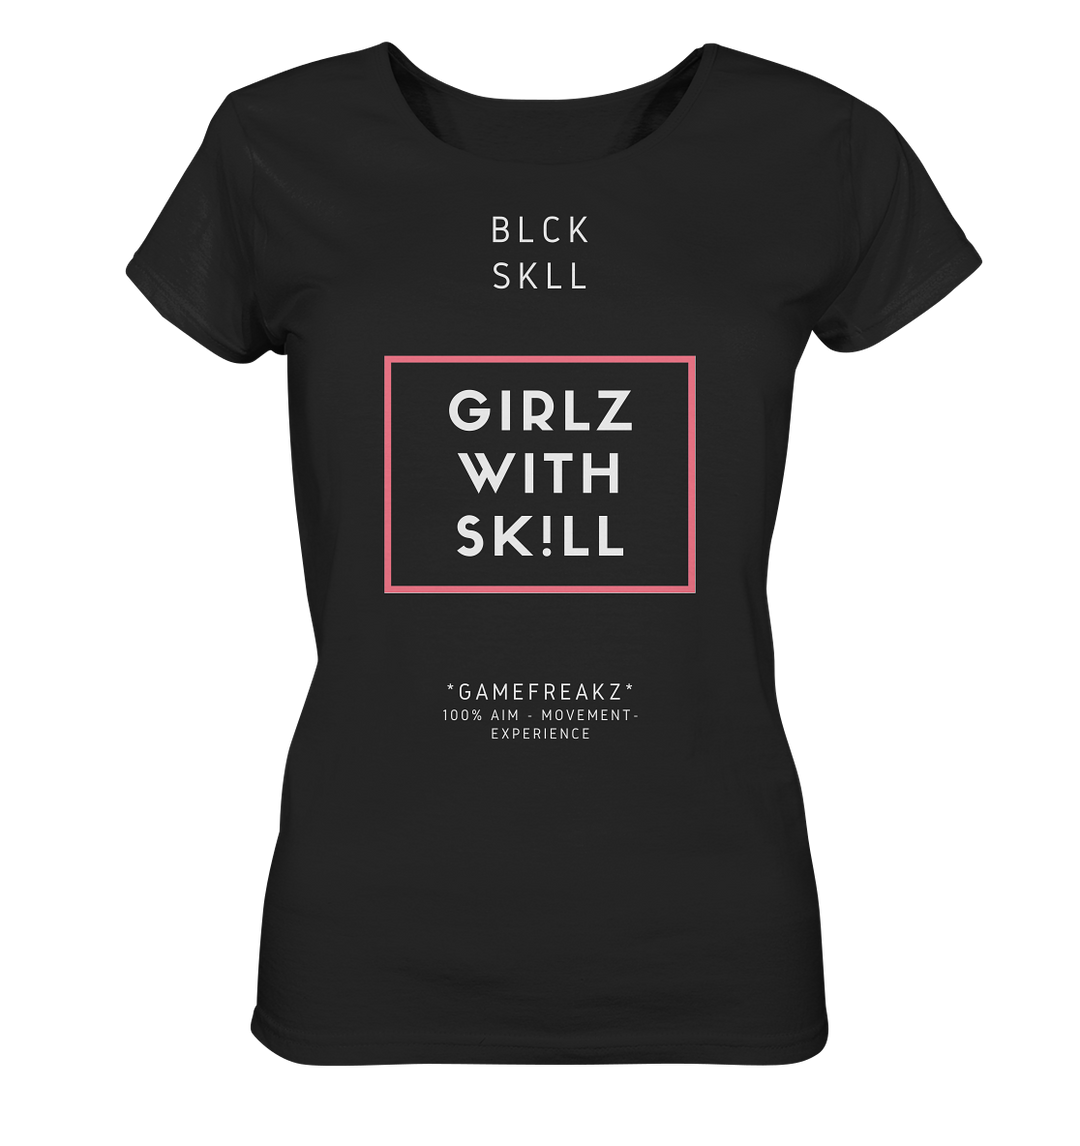 BLCK SKLL SERIES - "SKILL GIRL" - Bio T-Shirt - Girl